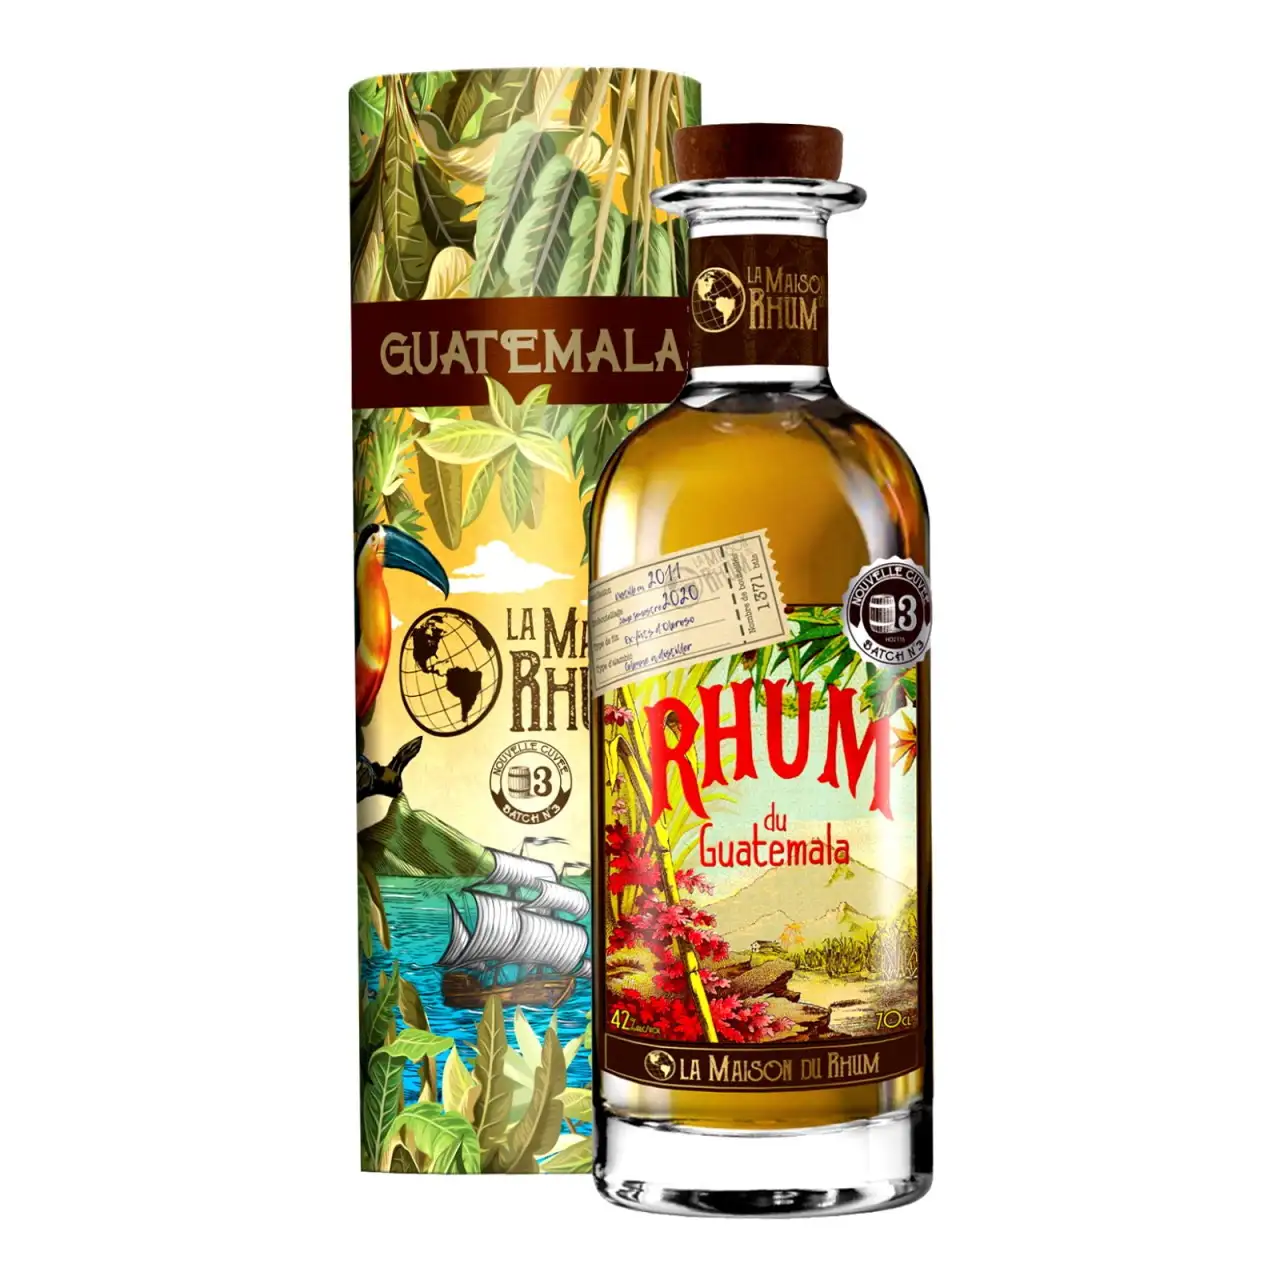 Image of the front of the bottle of the rum La Maison du Rhum Botran #3